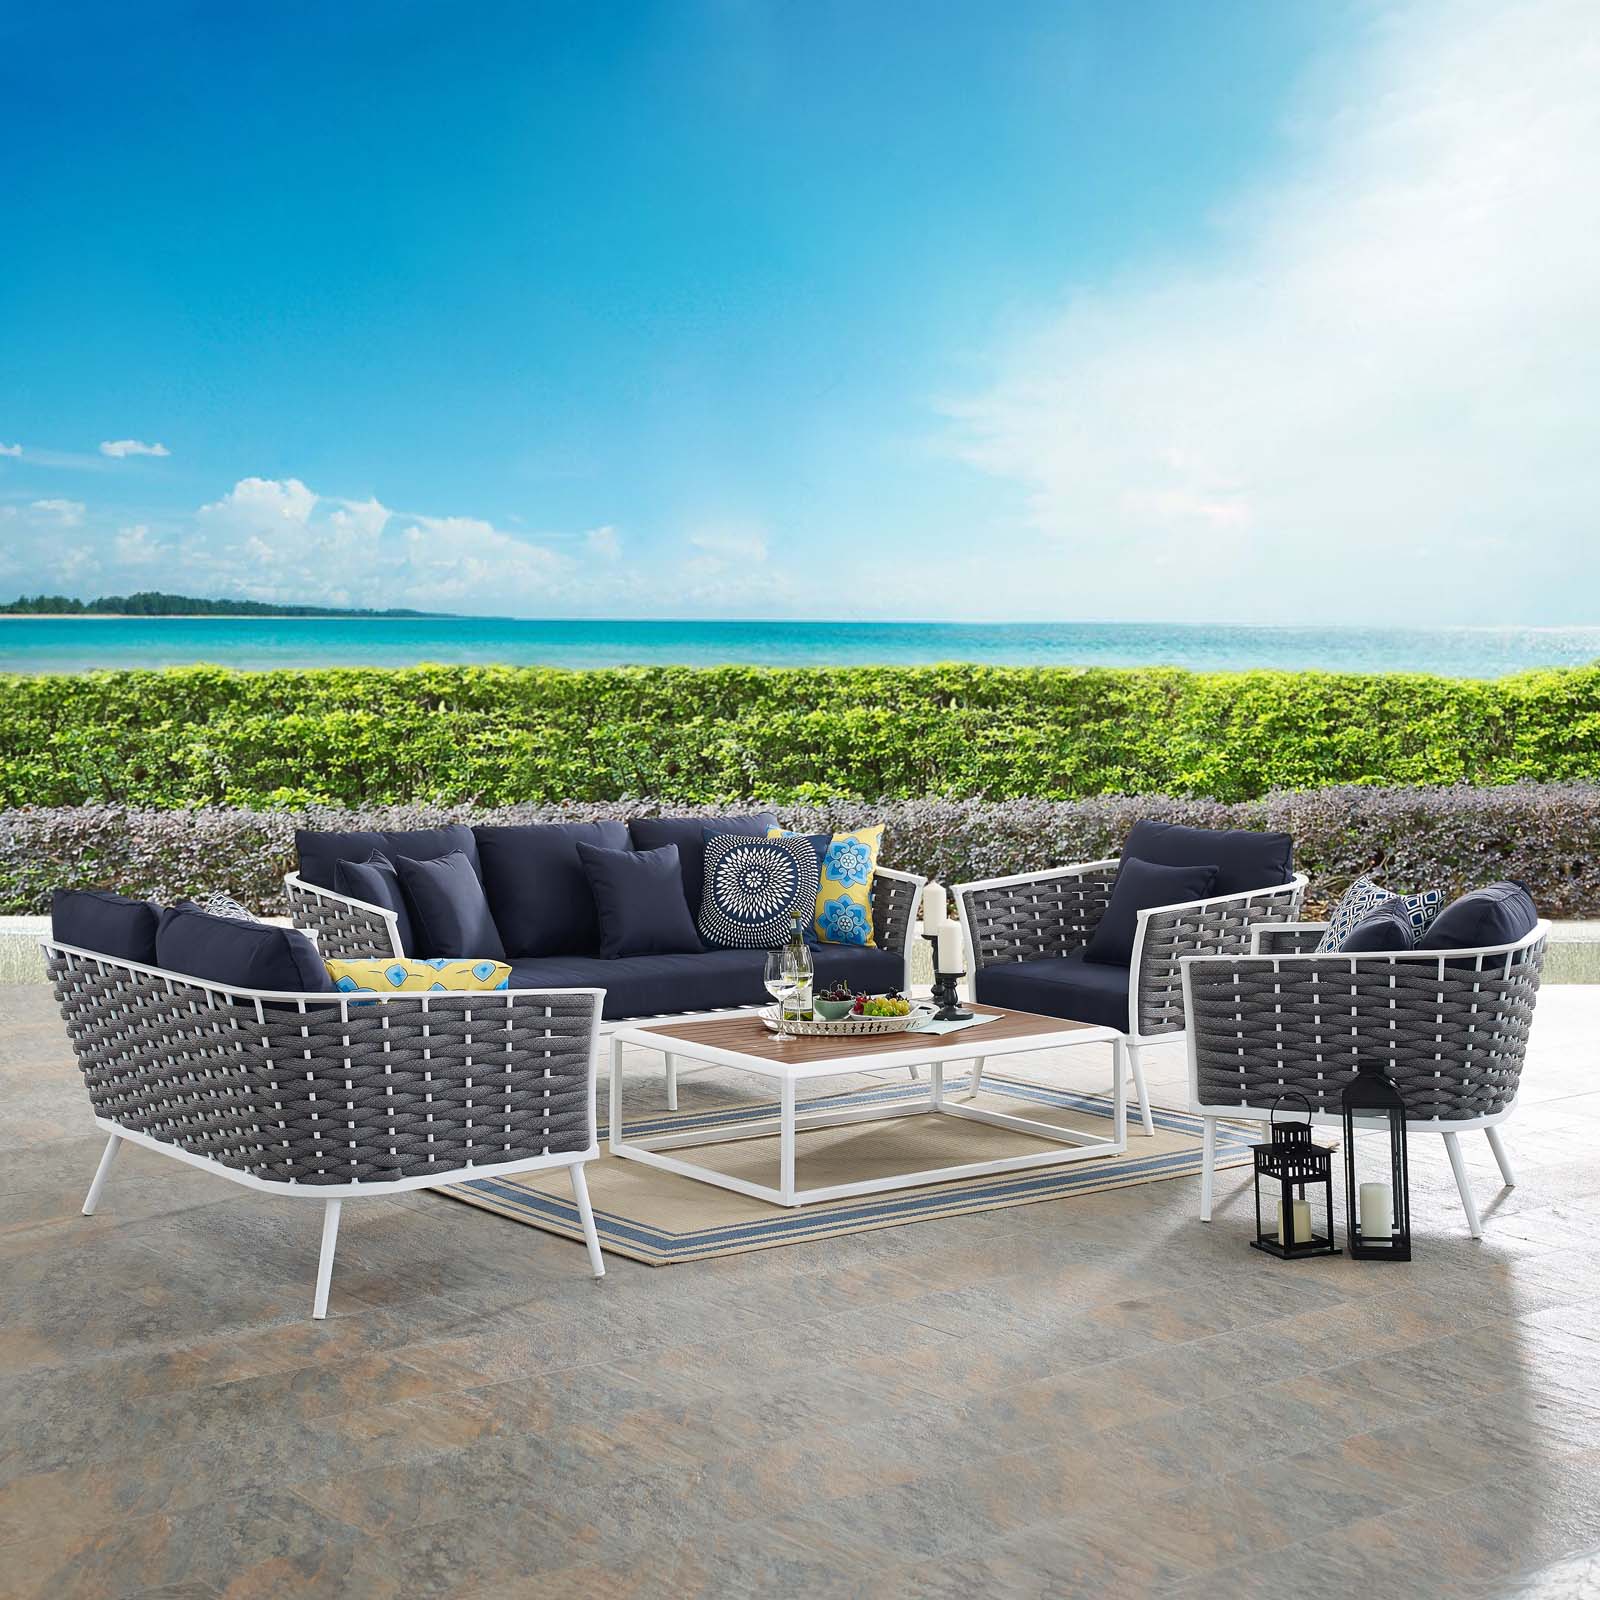 Modern Contemporary Urban Design Outdoor Patio Balcony Garden Furniture Lounge Chair, Sofa and Table Set, Fabric Aluminium, White Navy - image 7 of 11